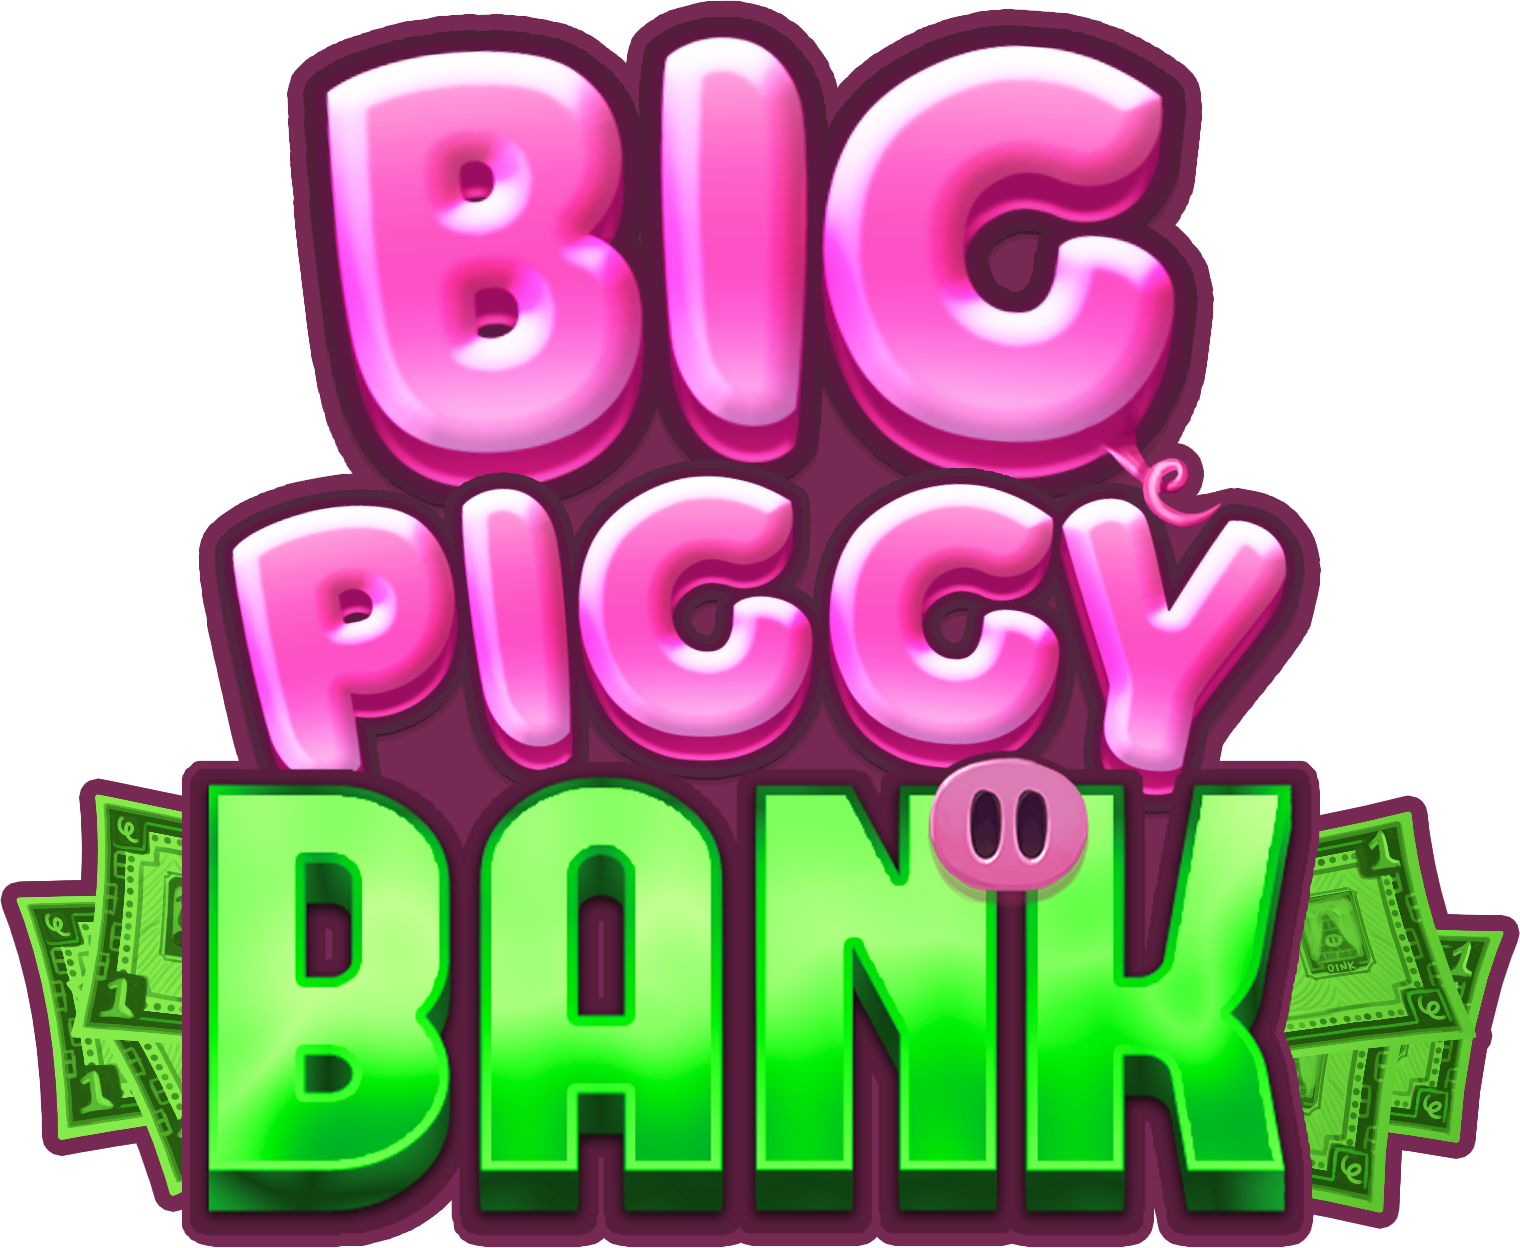 Big Piggy Bank Logo